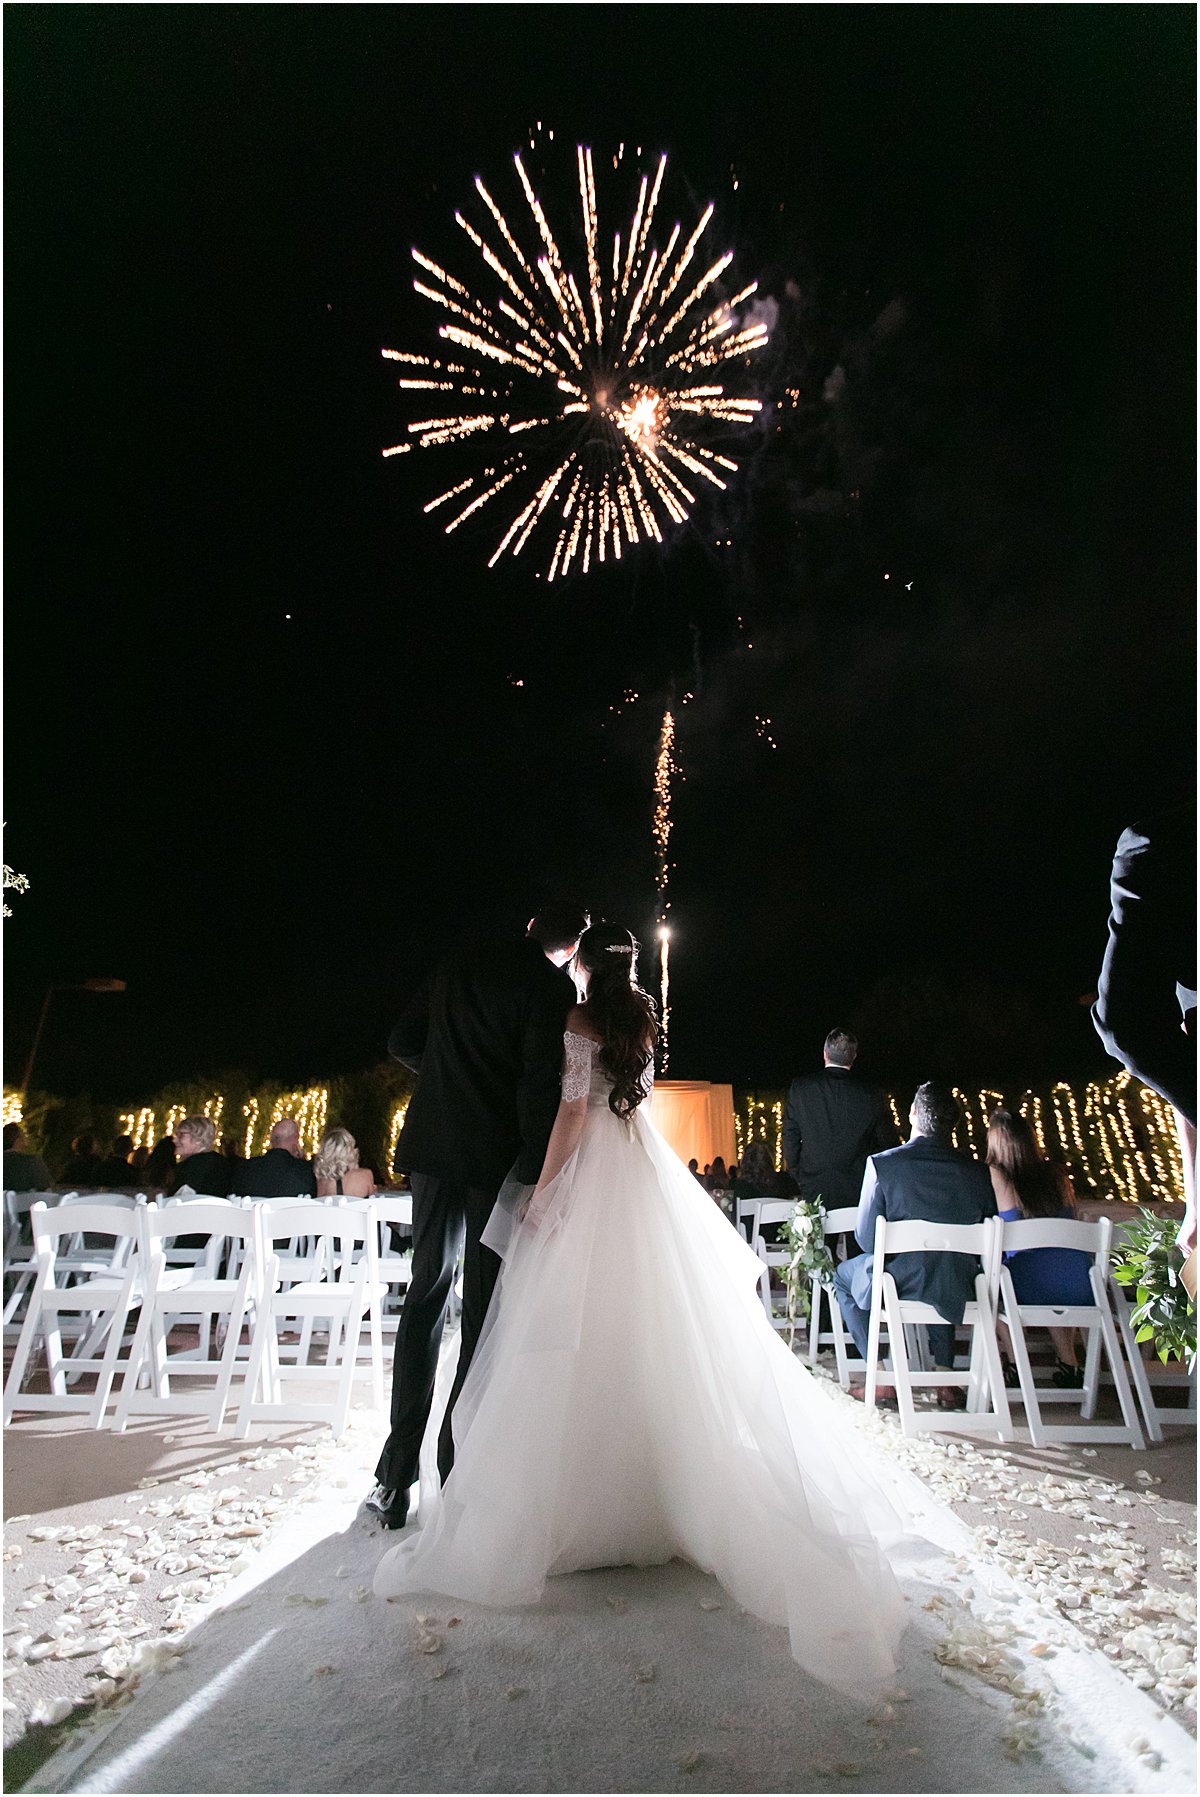 Christmas Wedding Ideas | Wedding Firework Display | Palm Beach, FL | Married in Palm Beach | www.marriedinpalmbeach.com | Katina Patriquin Photography | Rackel Gehlsen Weddings and Events